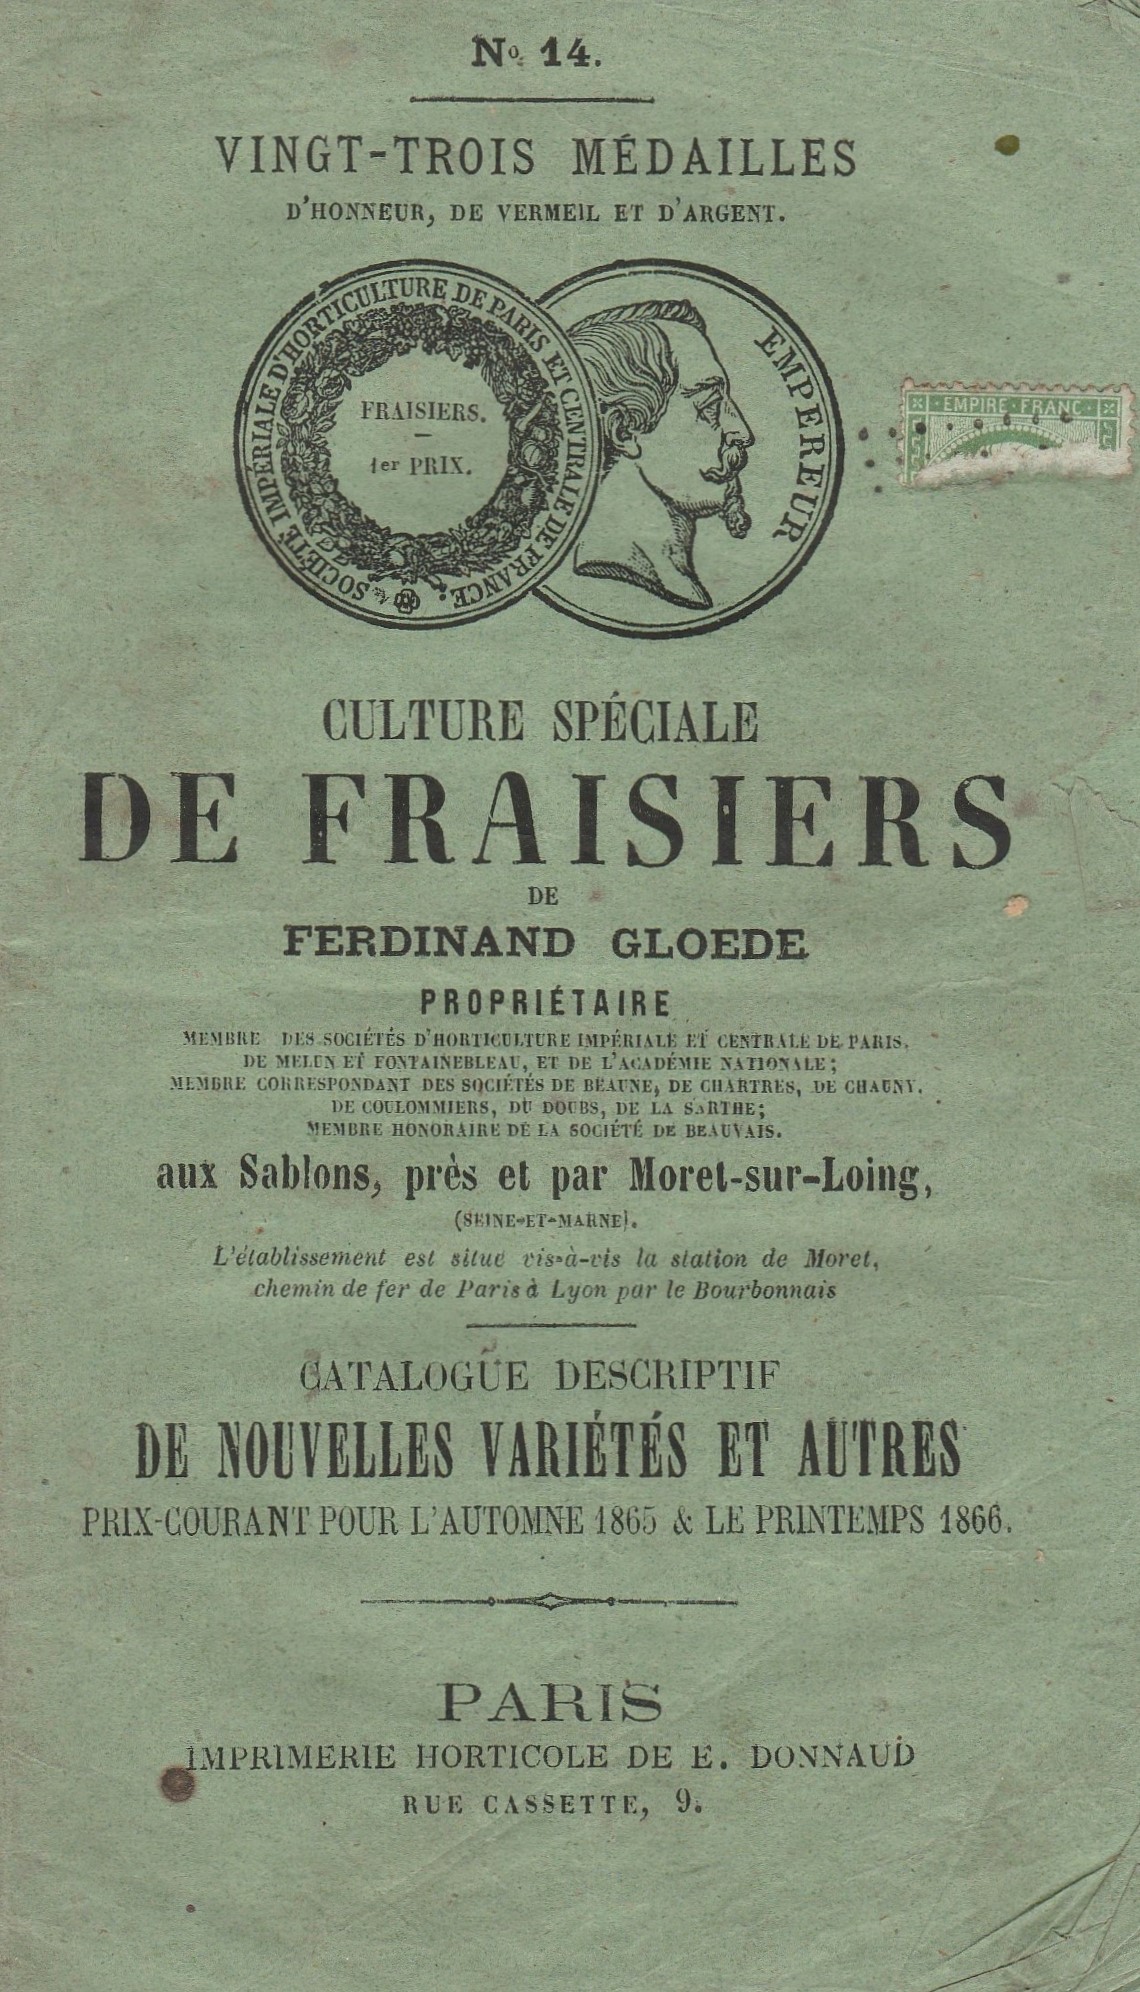 Soupert & Notting cat gloede 1866 (2)